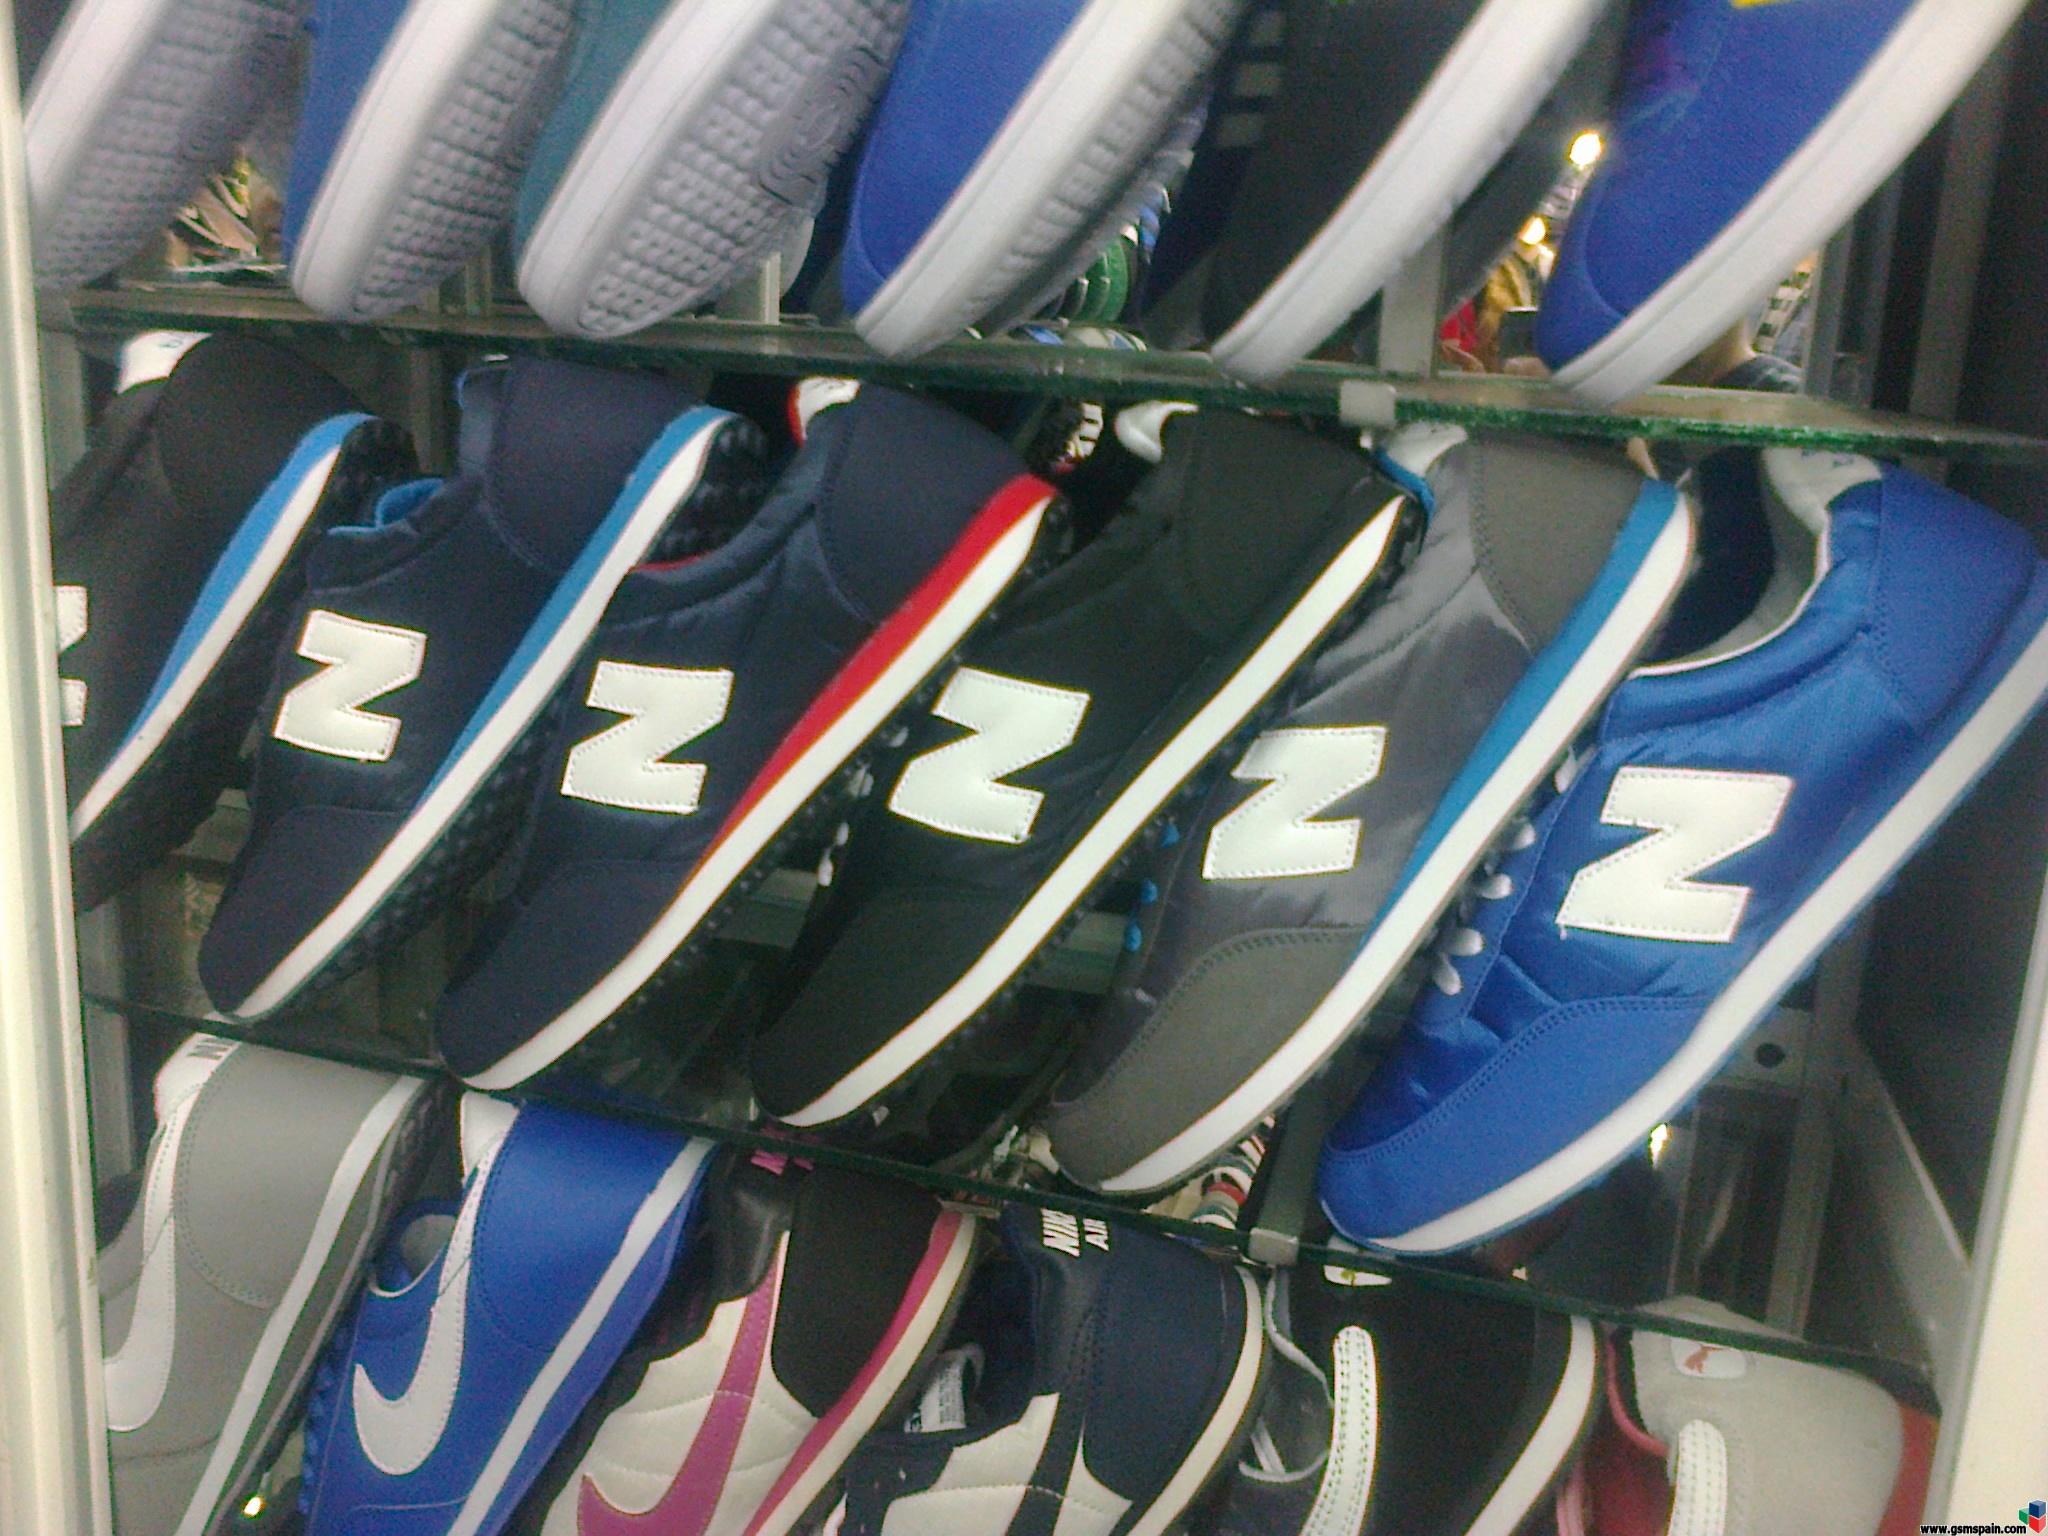 [vendo] Zapatiilas New Balance, Adidas Y Asics!!!!